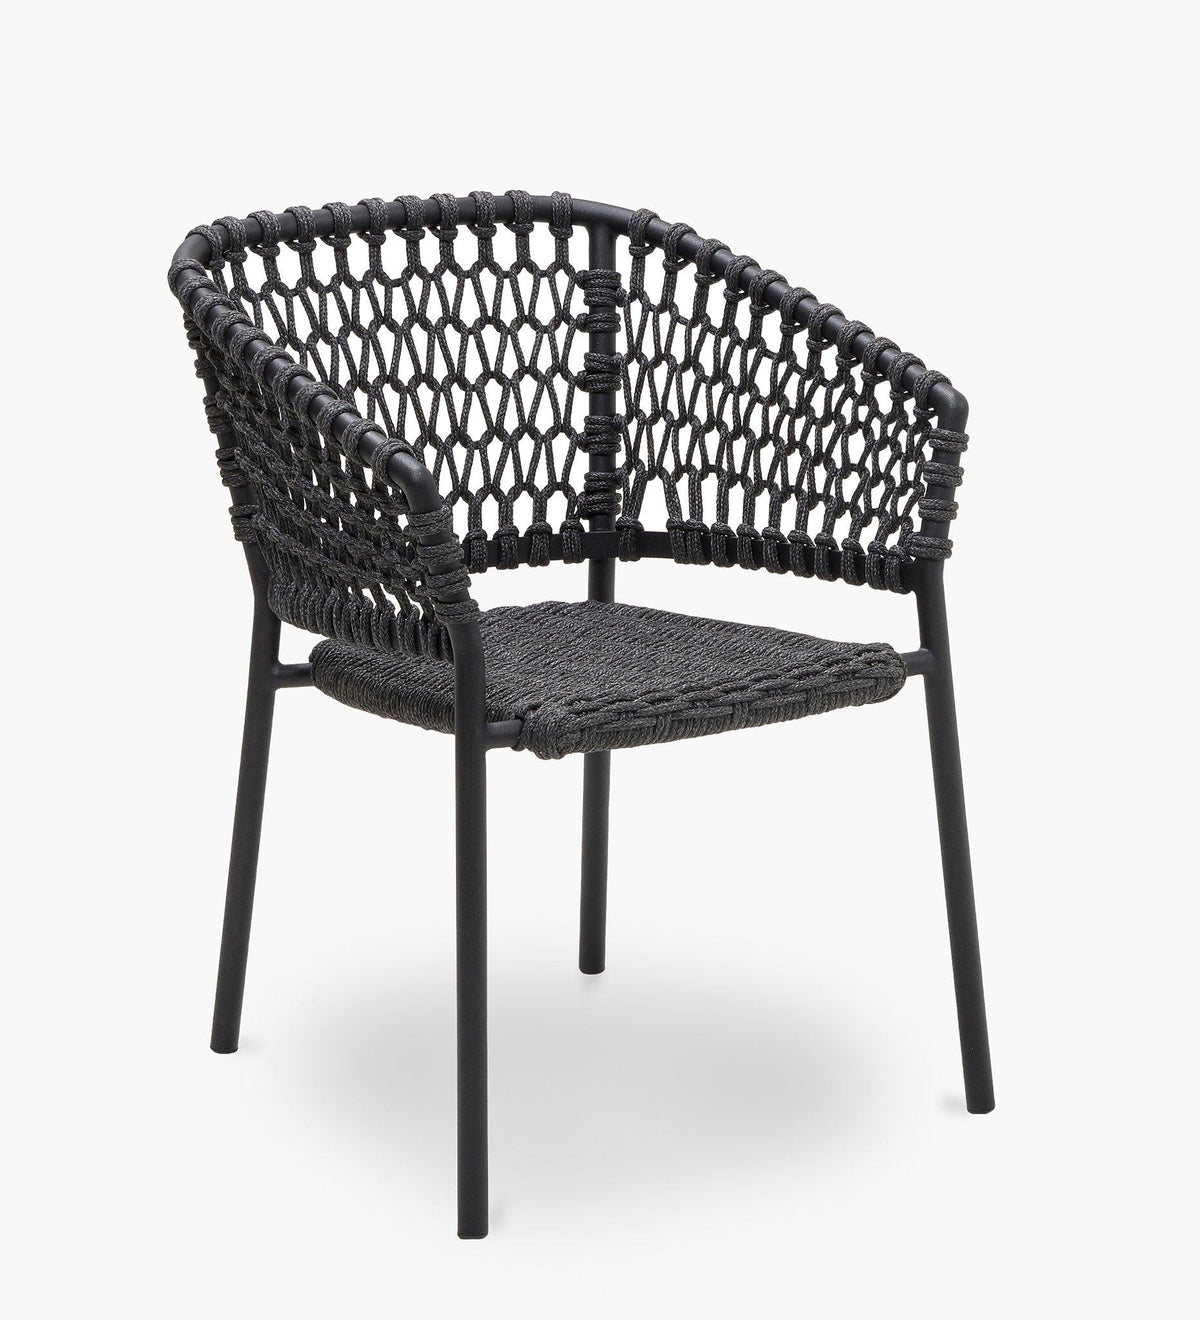 Cane-Line Ocean Chair,image:Dark Grey RODG # 5417RODG